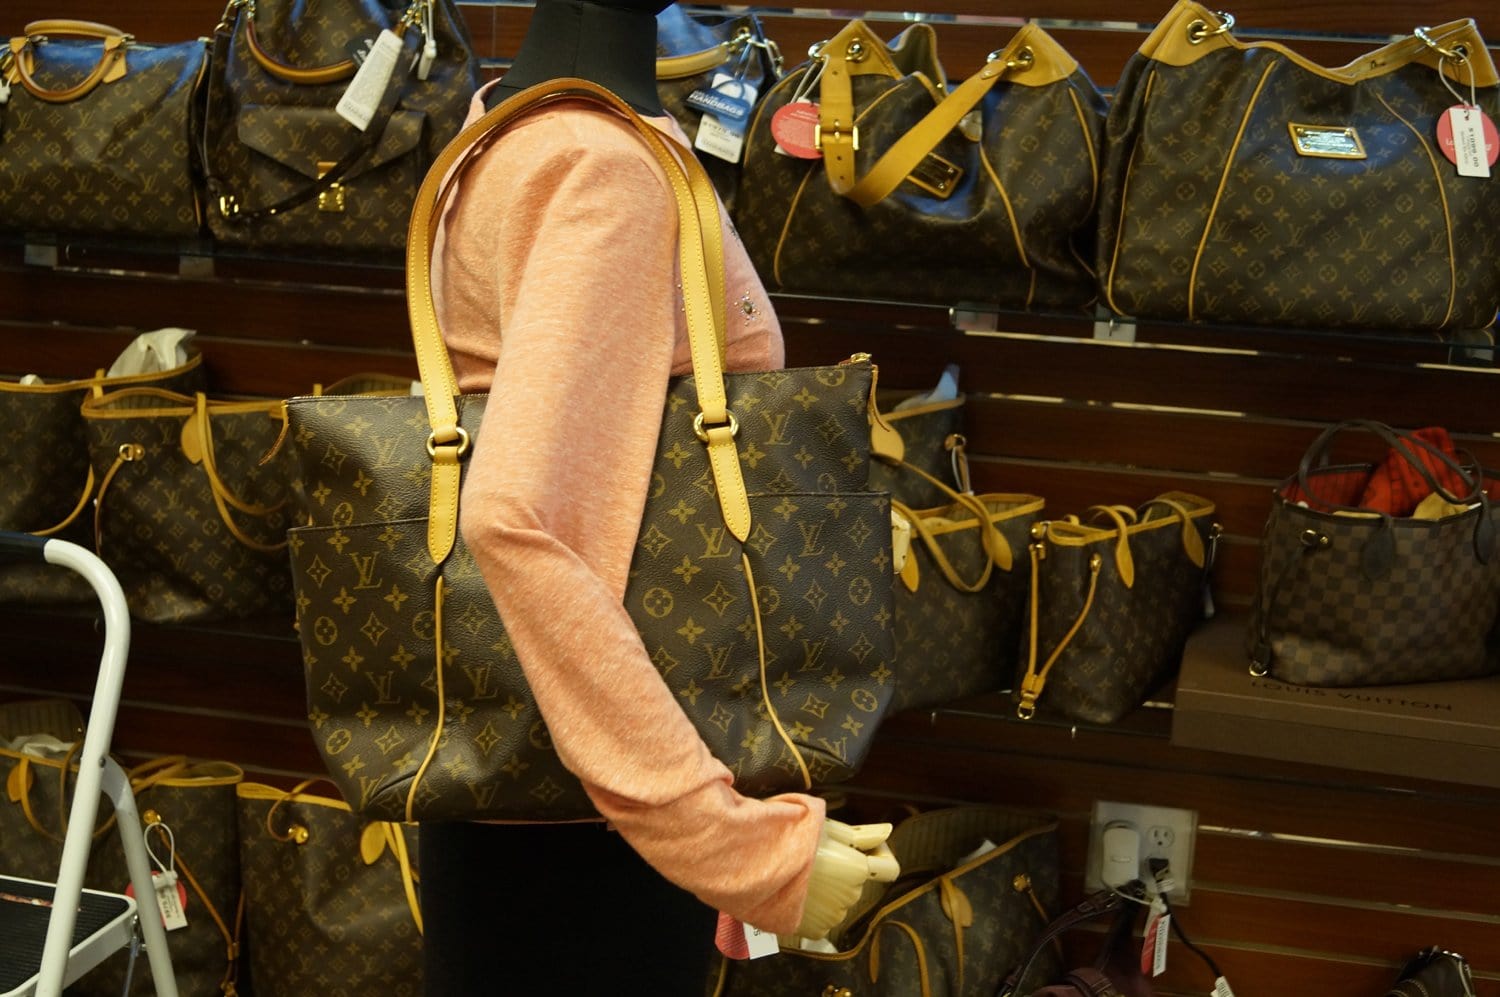 Louis Vuitt.on Shopping Bag Shopping Bag Backpack Shoulder Bag 